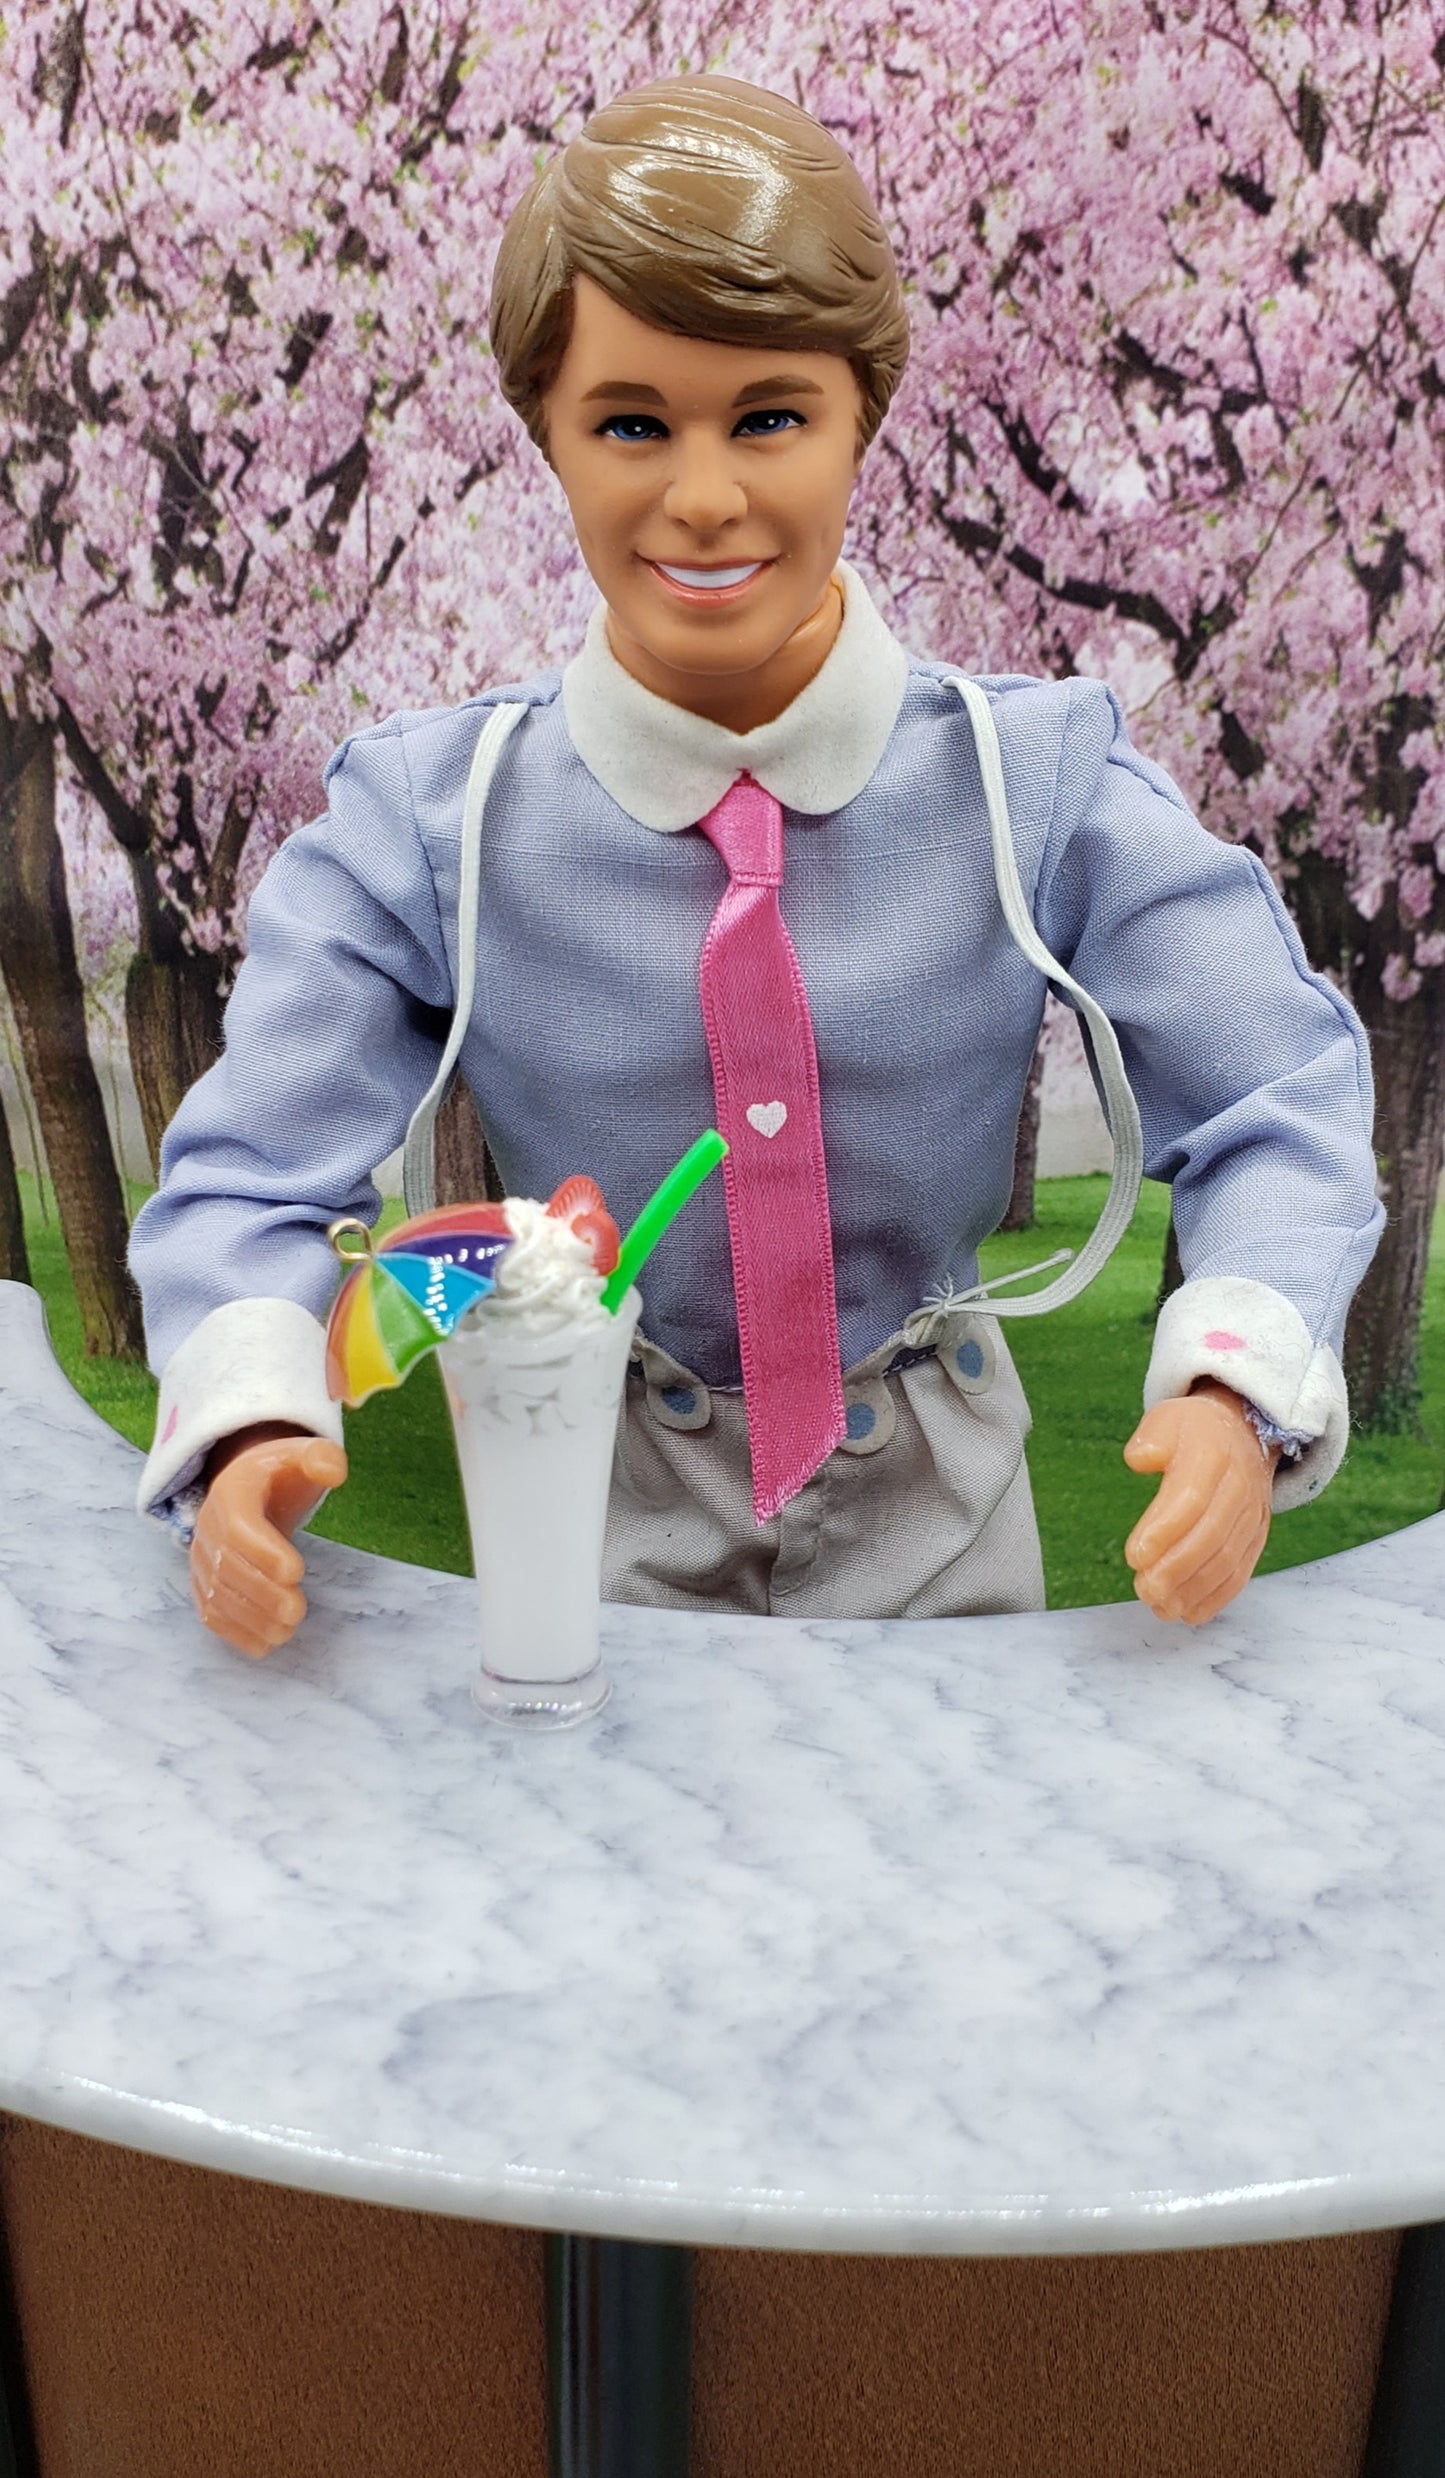 Ken with an umbrella drink